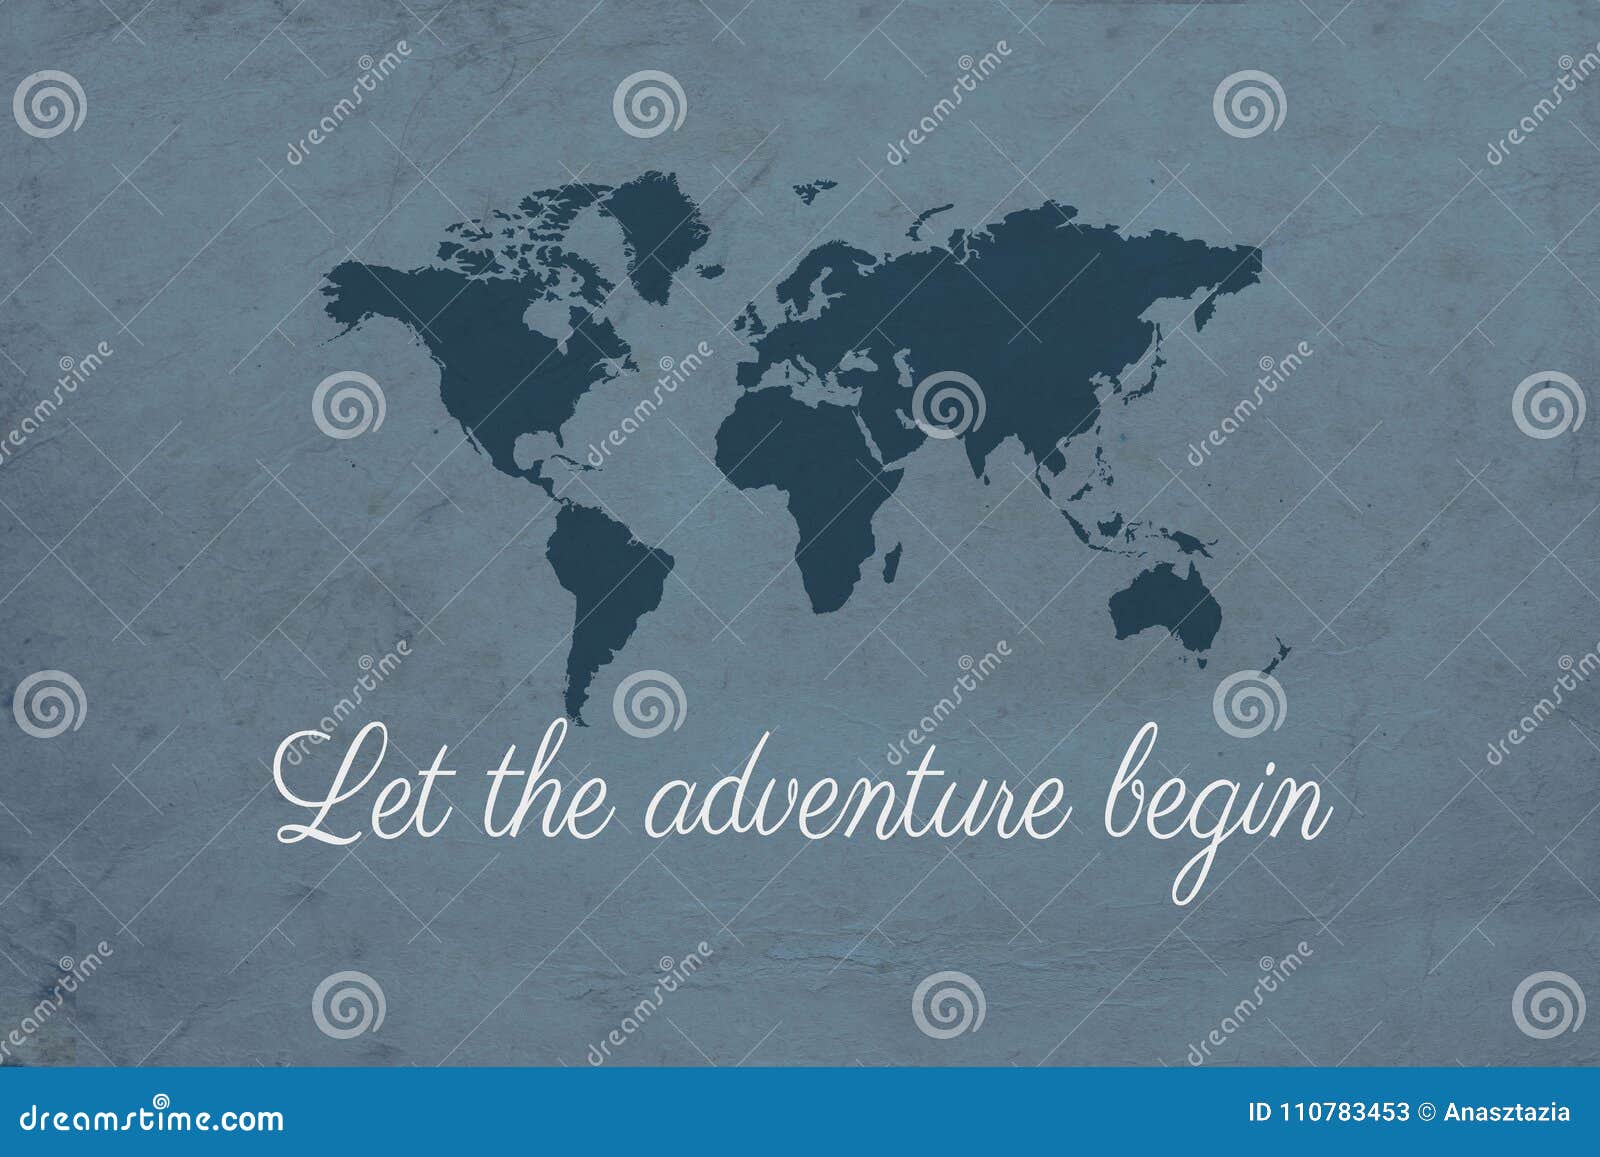 Let Adventure Begin Illustration Text Design World Map Decoration Grunge Blue Background 110783453 